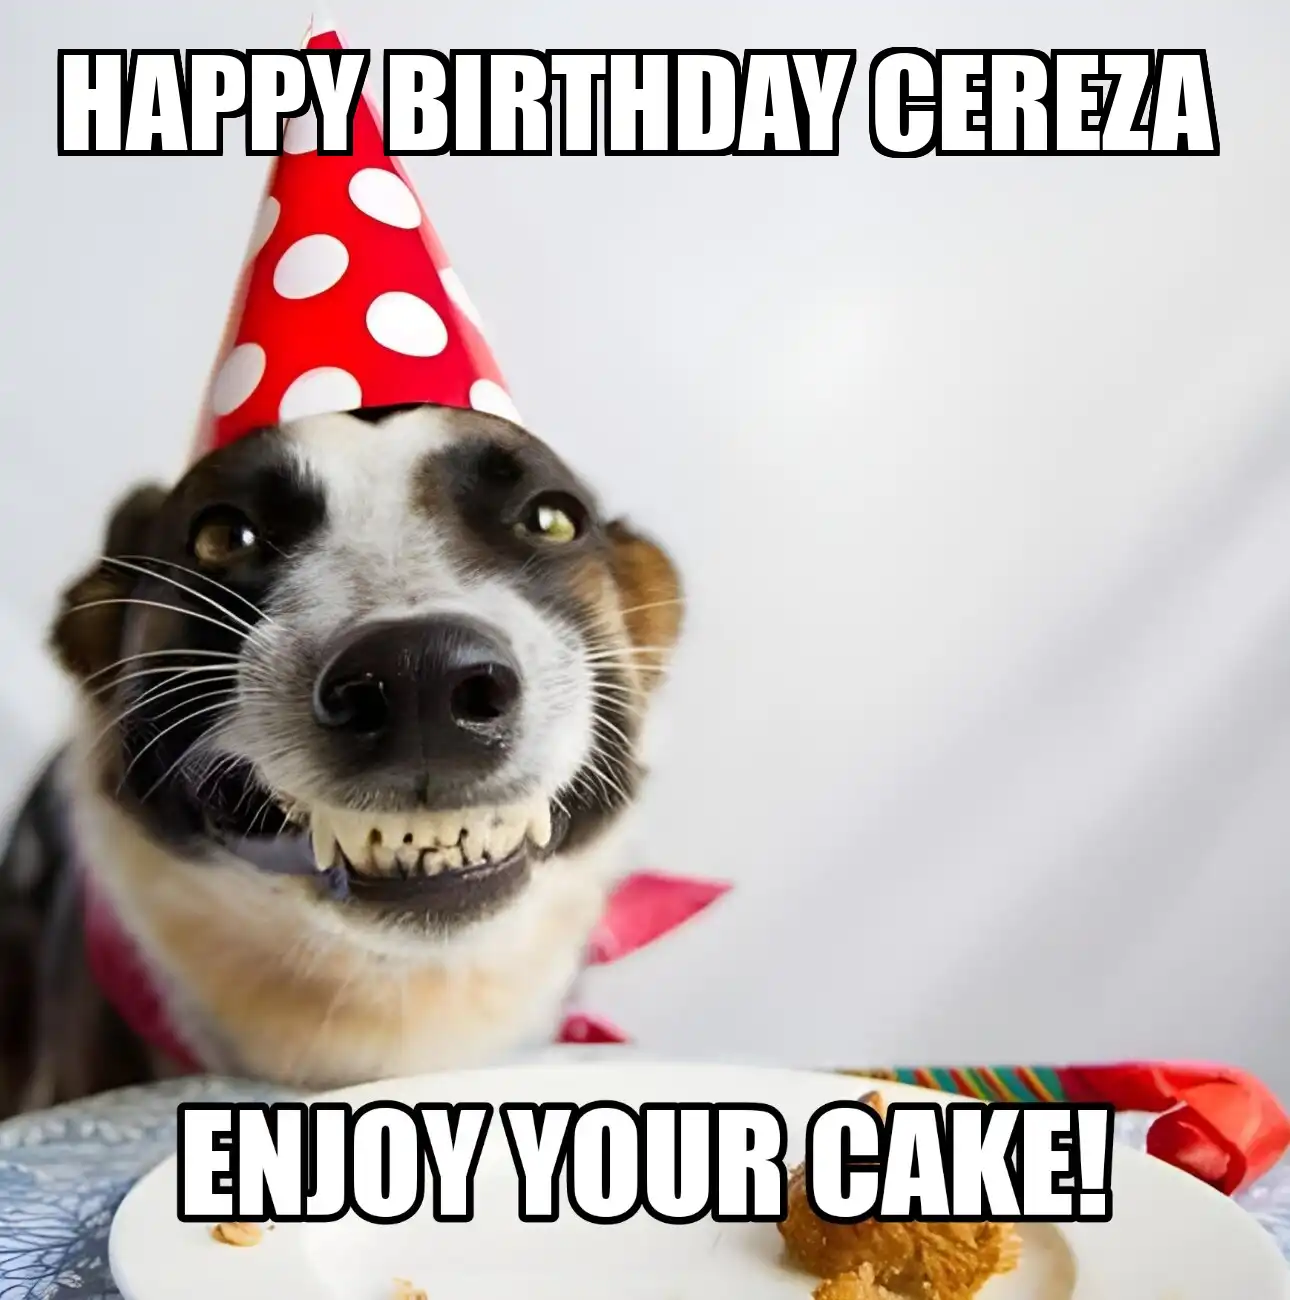 Happy Birthday Cereza Enjoy Your Cake Dog Meme